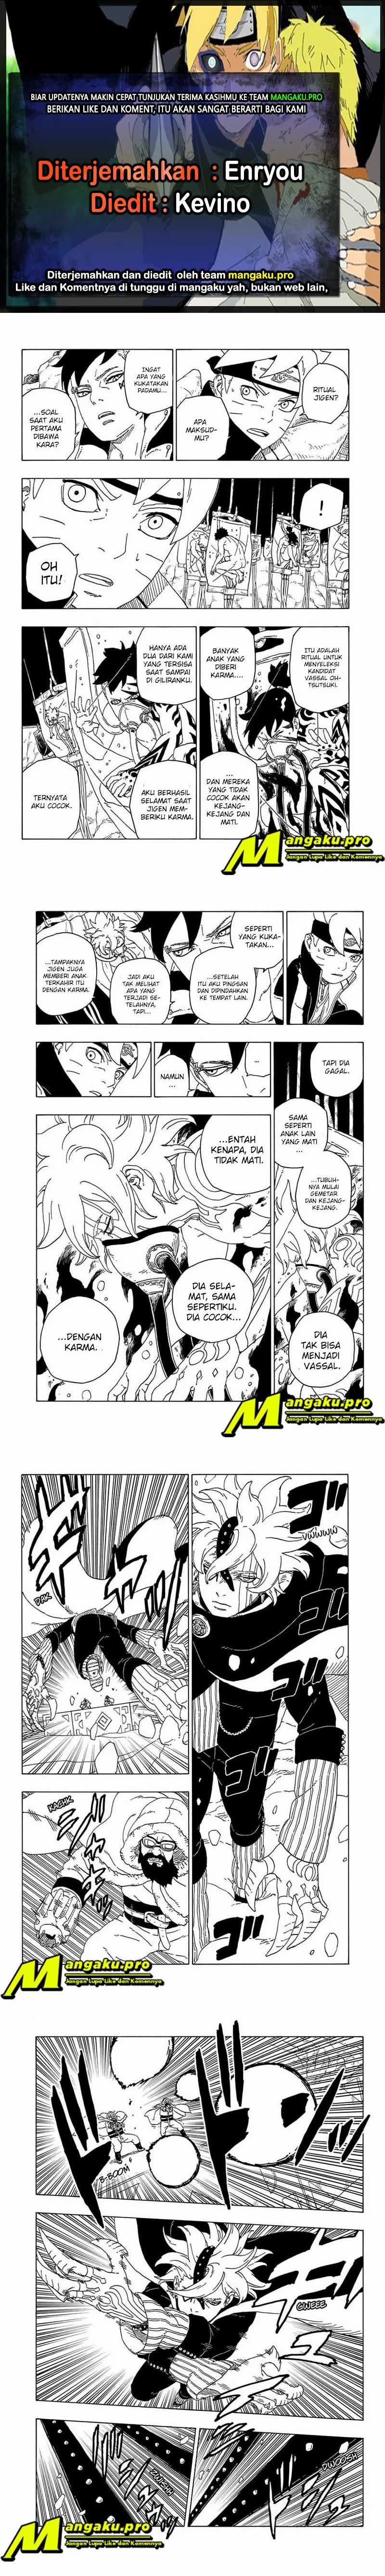 Boruto: Naruto Next Generations: Chapter 56.2 - Page 1